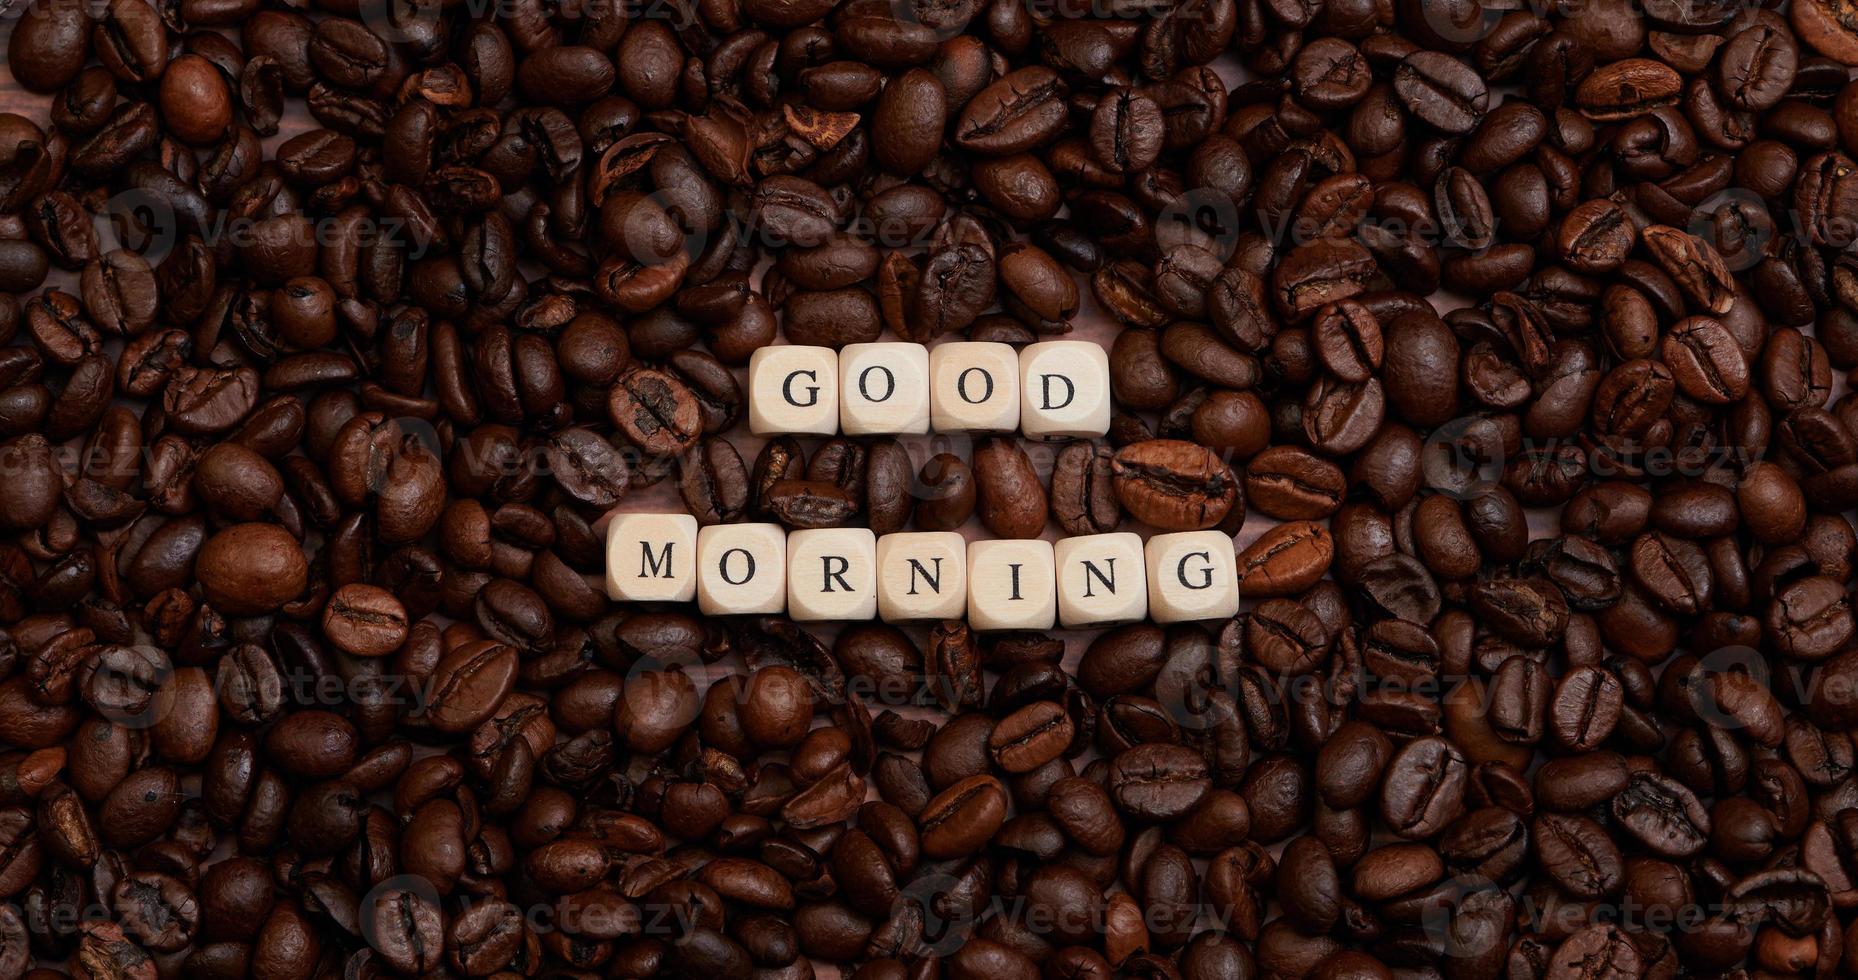 Text Guten Morgen inmitten vieler gerösteter Kaffeebohnen foto